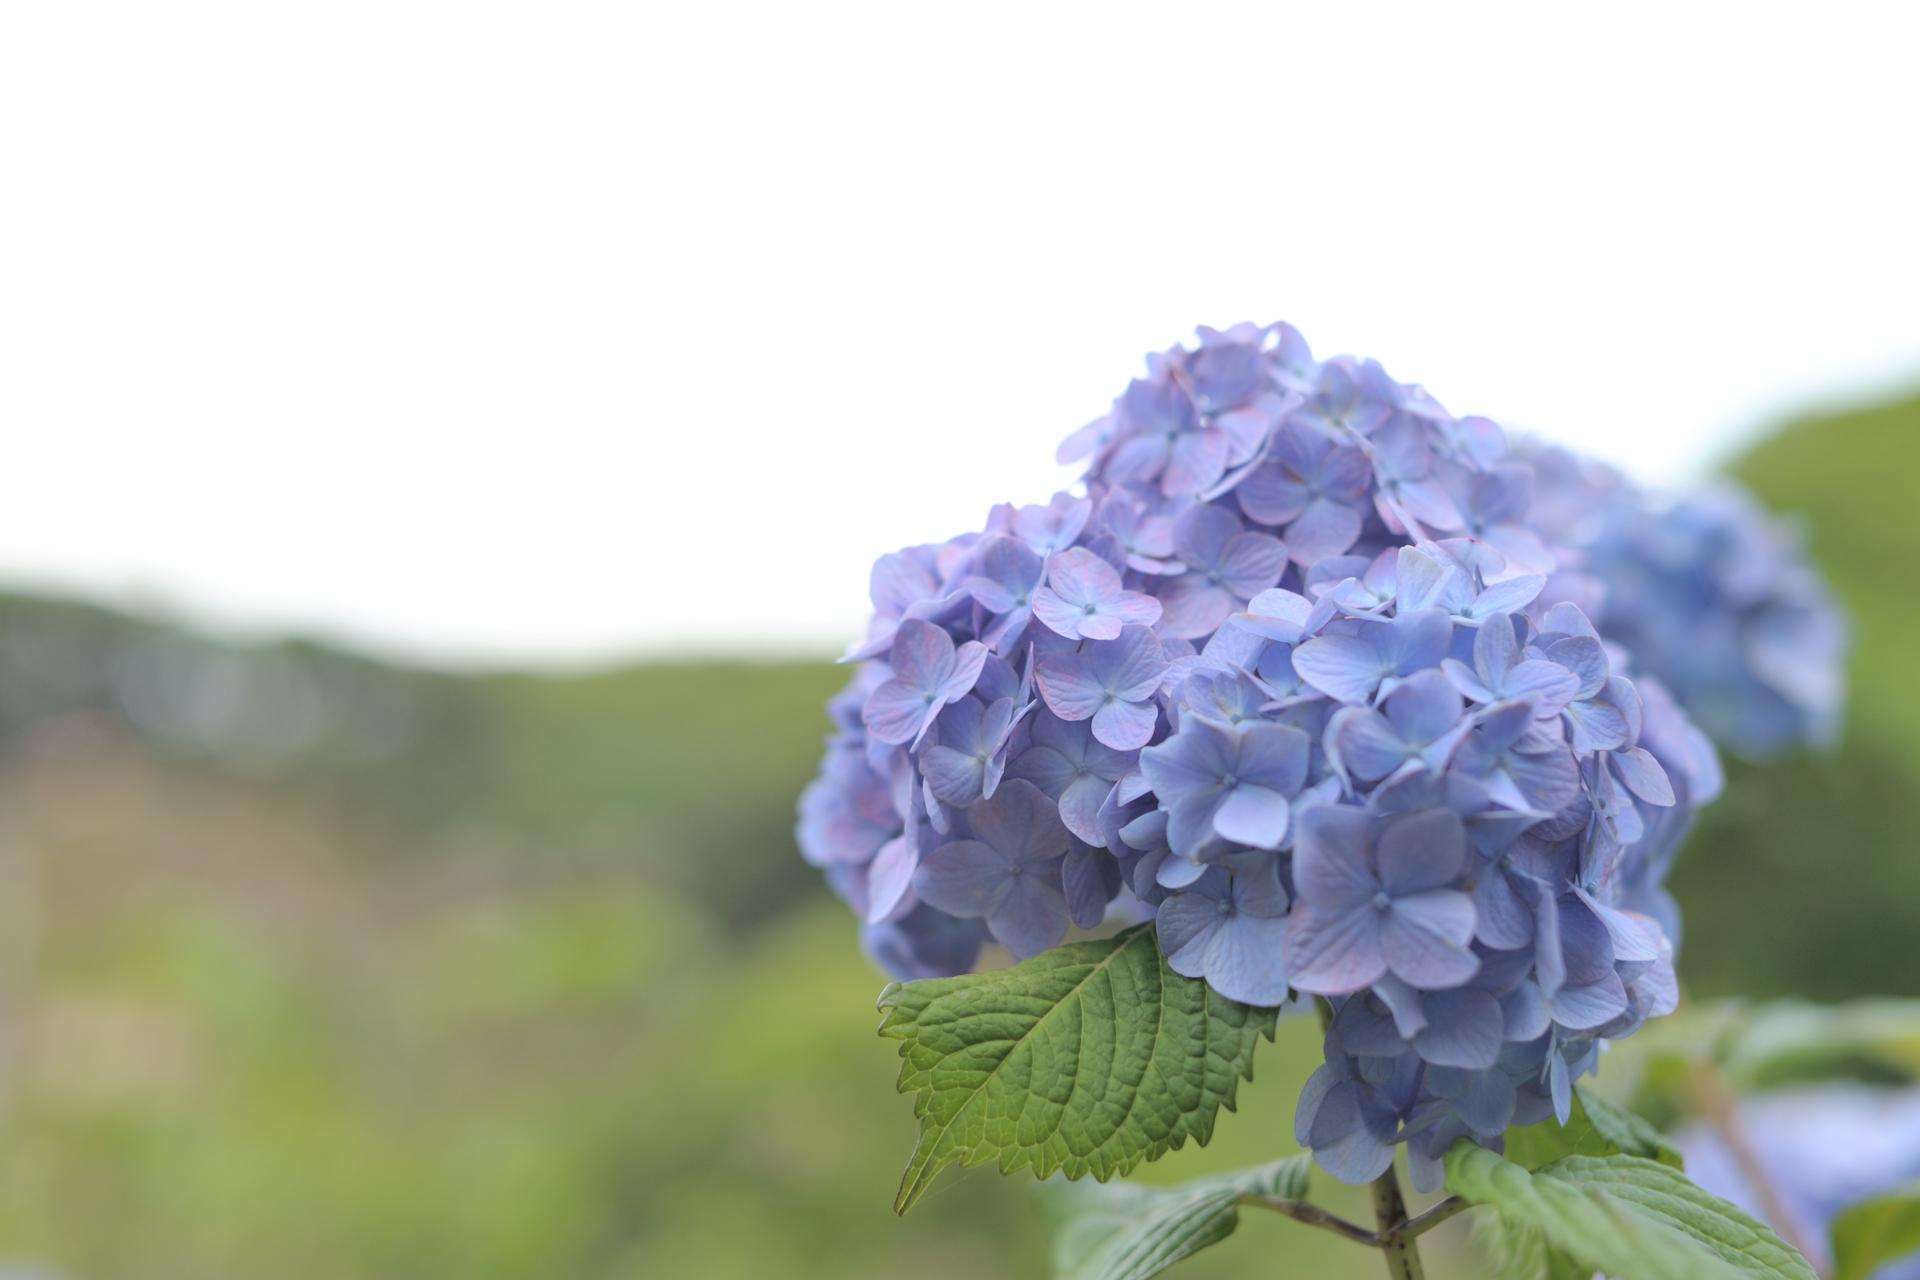 19x1280 梅雨 の あじさい が 美しい壁紙 紫陽花 壁紙 アジサイ が きれいな壁紙 400 紫陽花 Naver まとめ